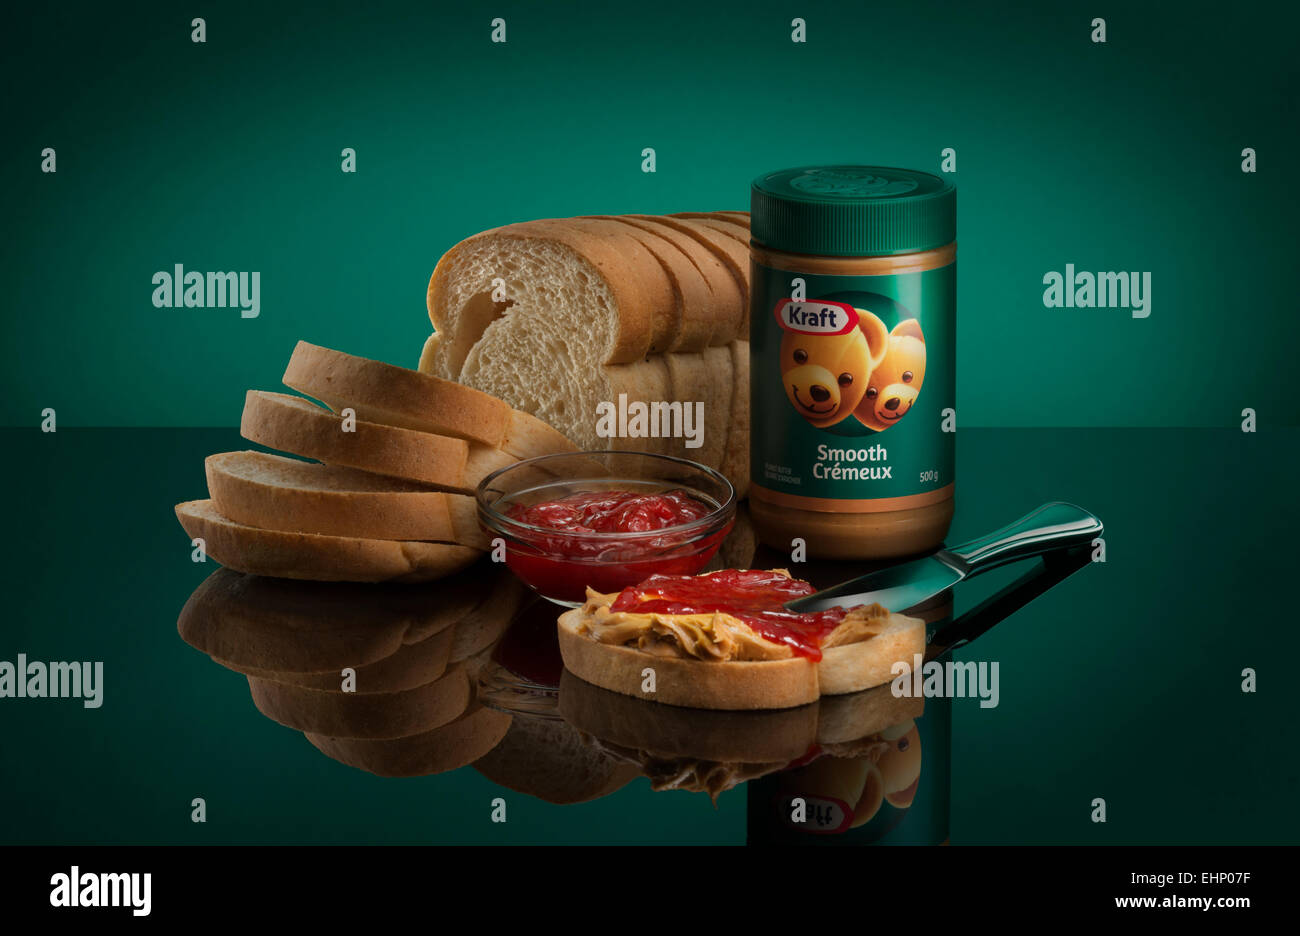 https://c8.alamy.com/comp/EHP07F/a-kraft-peanut-butter-and-jelly-or-jam-sandwich-is-seen-in-studio-EHP07F.jpg